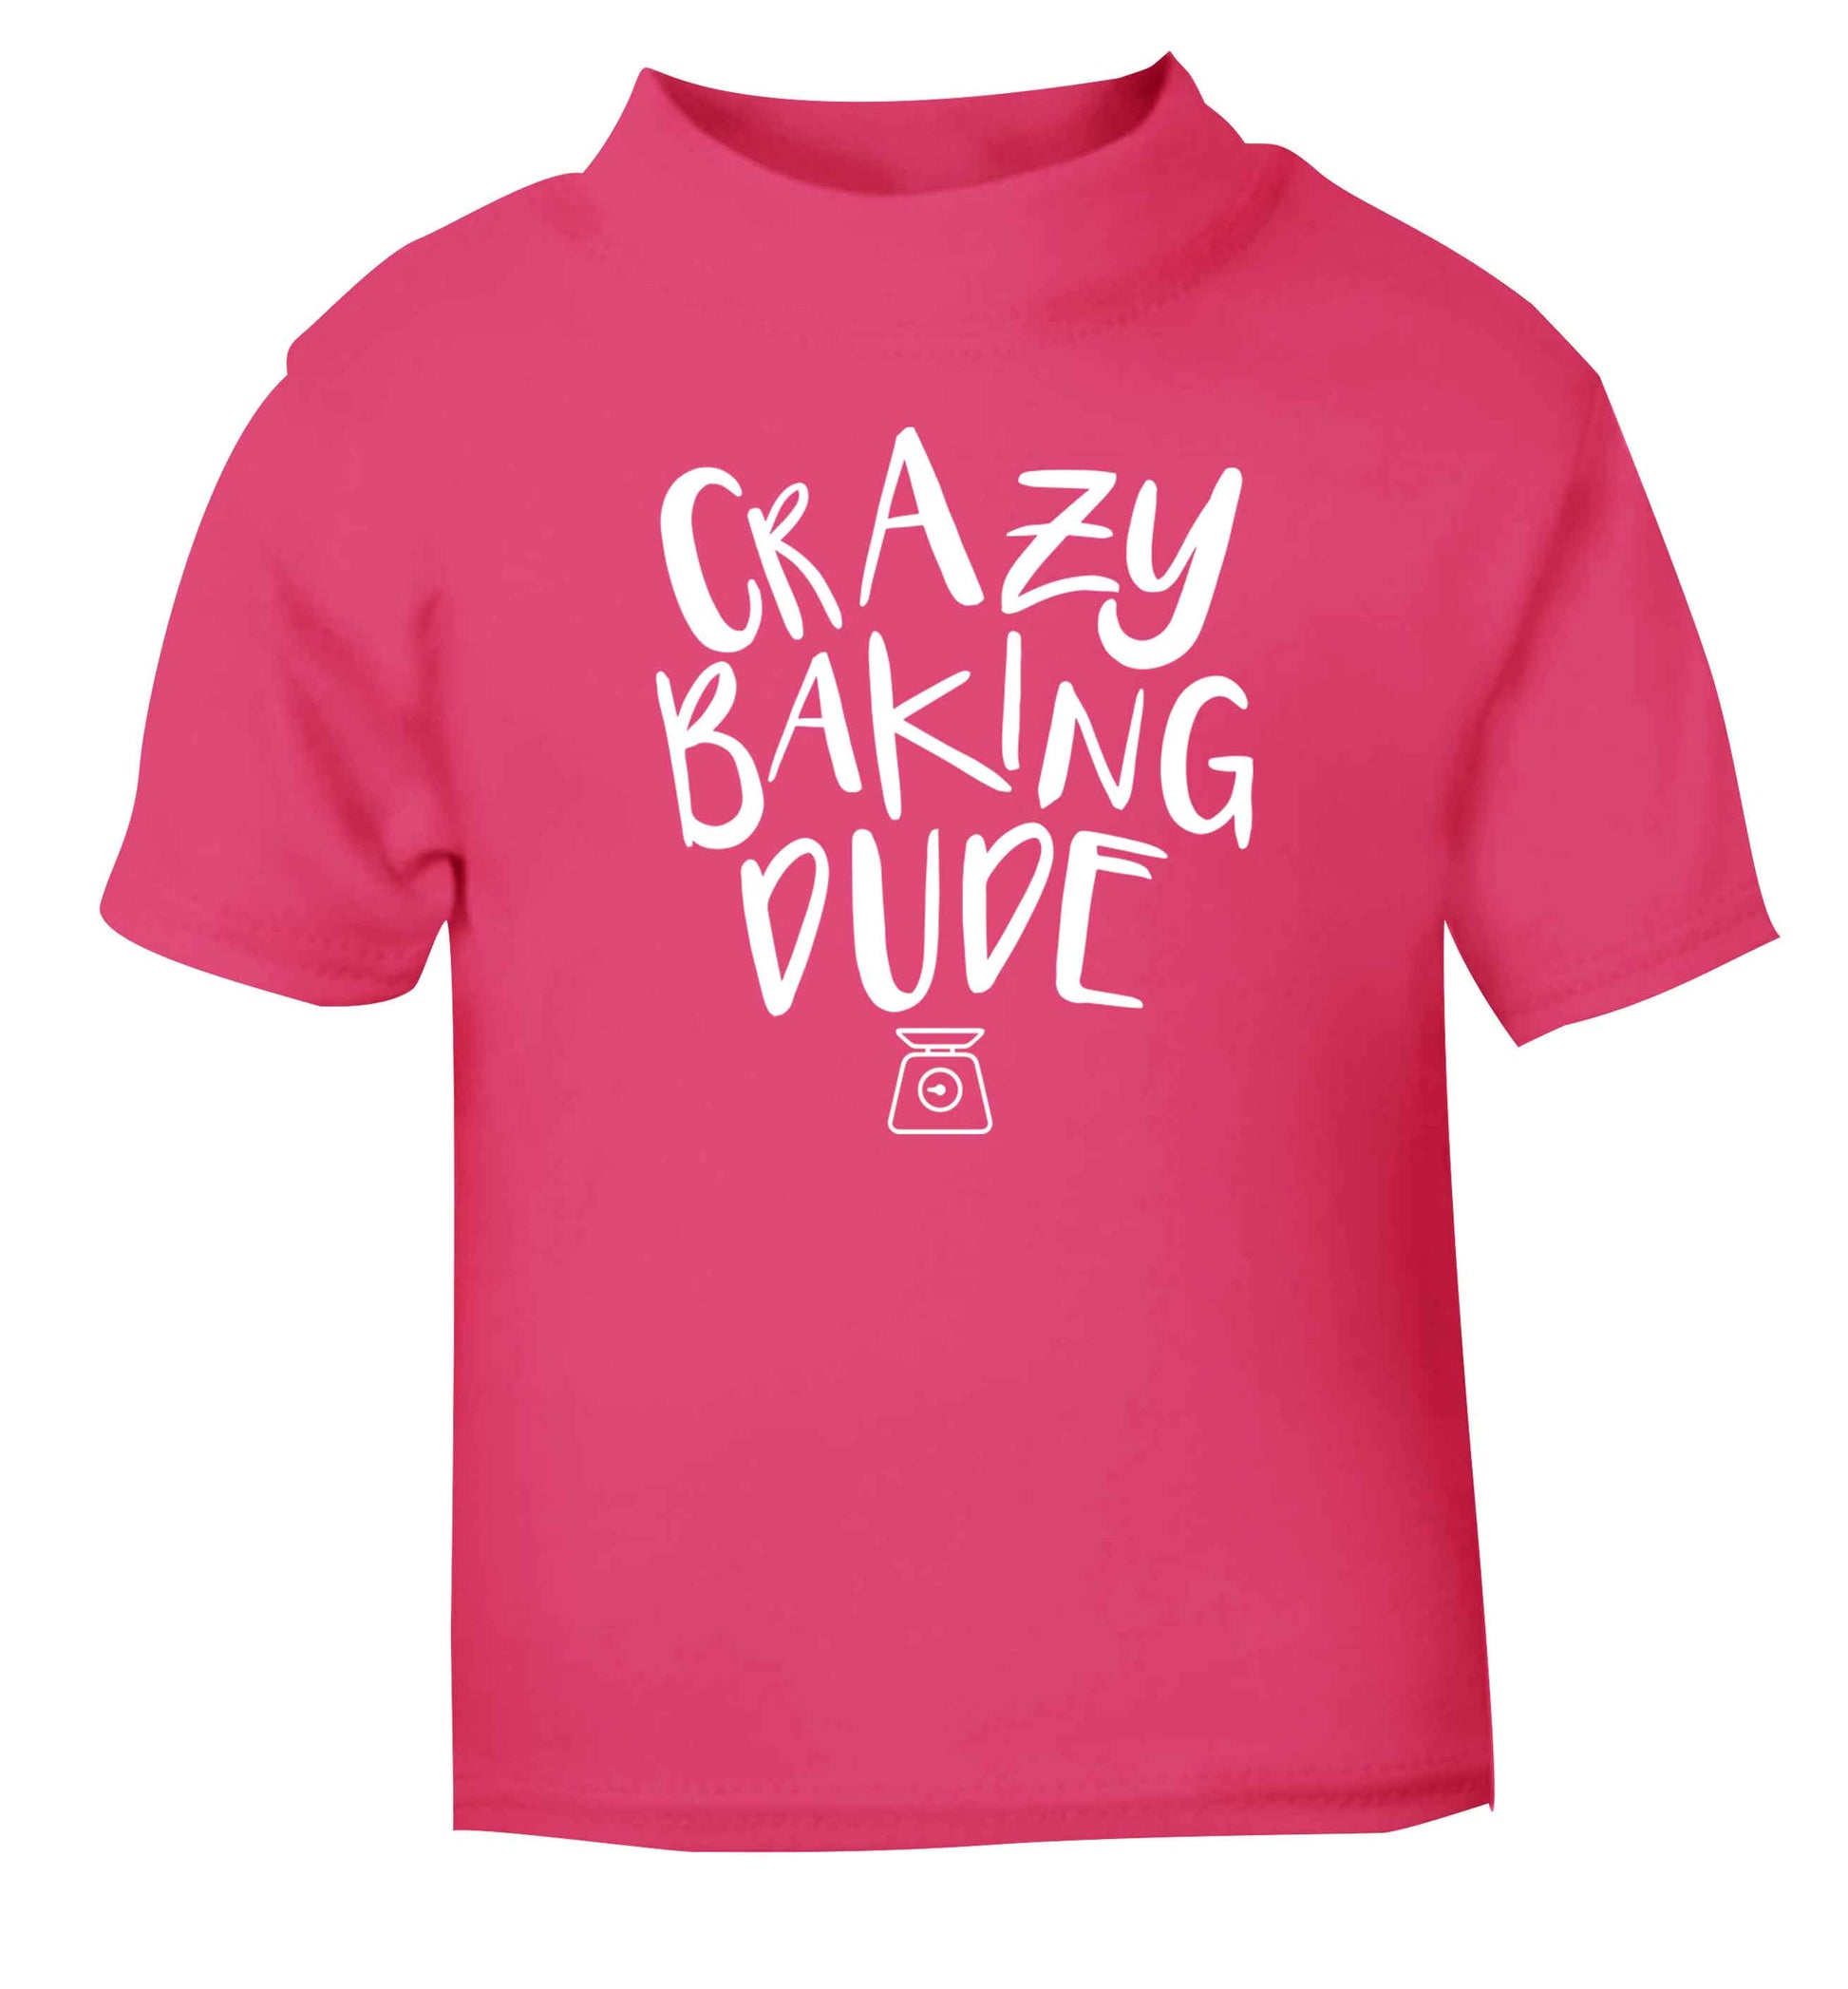 Crazy baking dude pink Baby Toddler Tshirt 2 Years